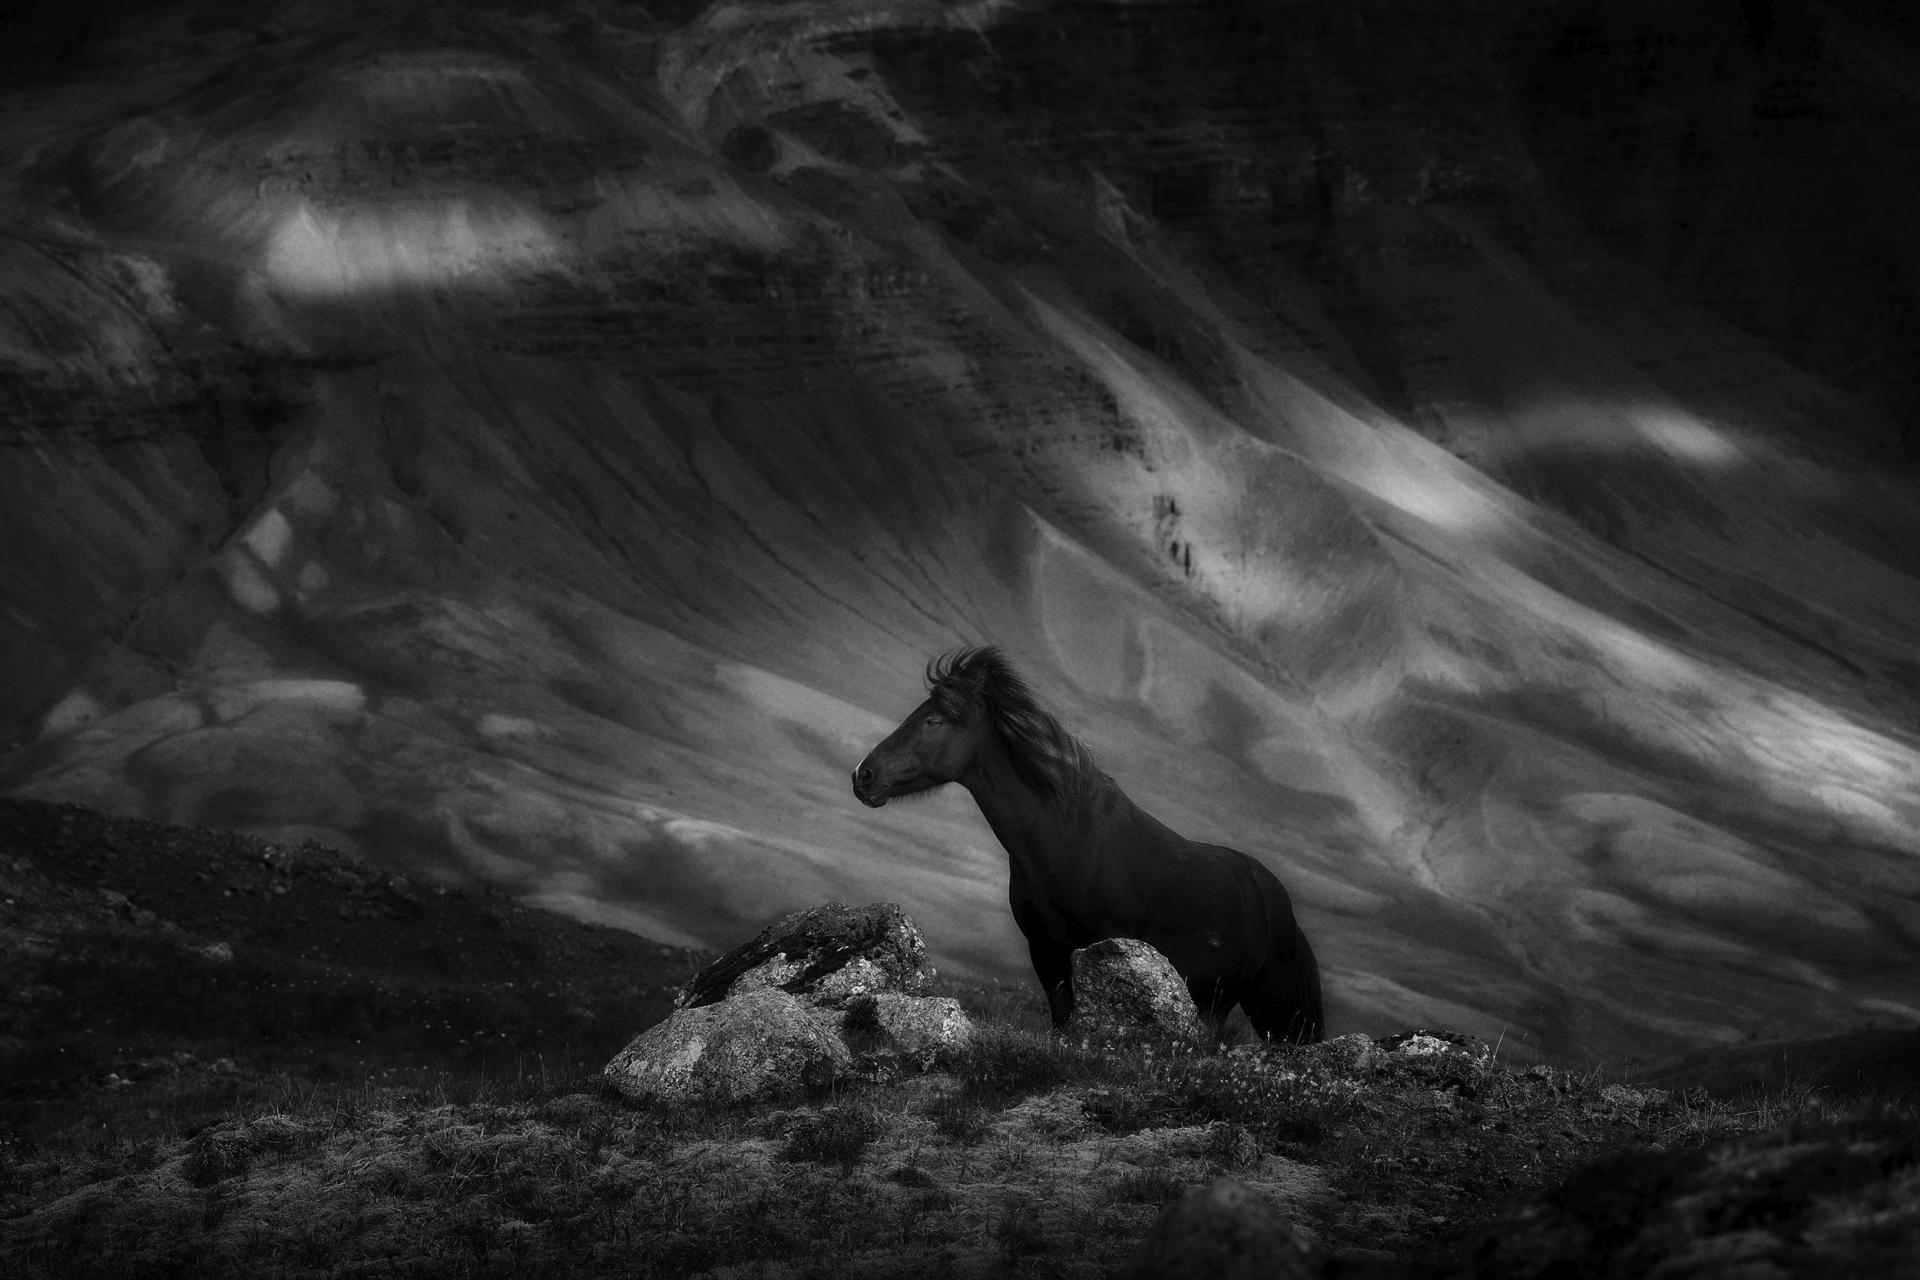 New York Photography Awards Winner - The Mountain Horse